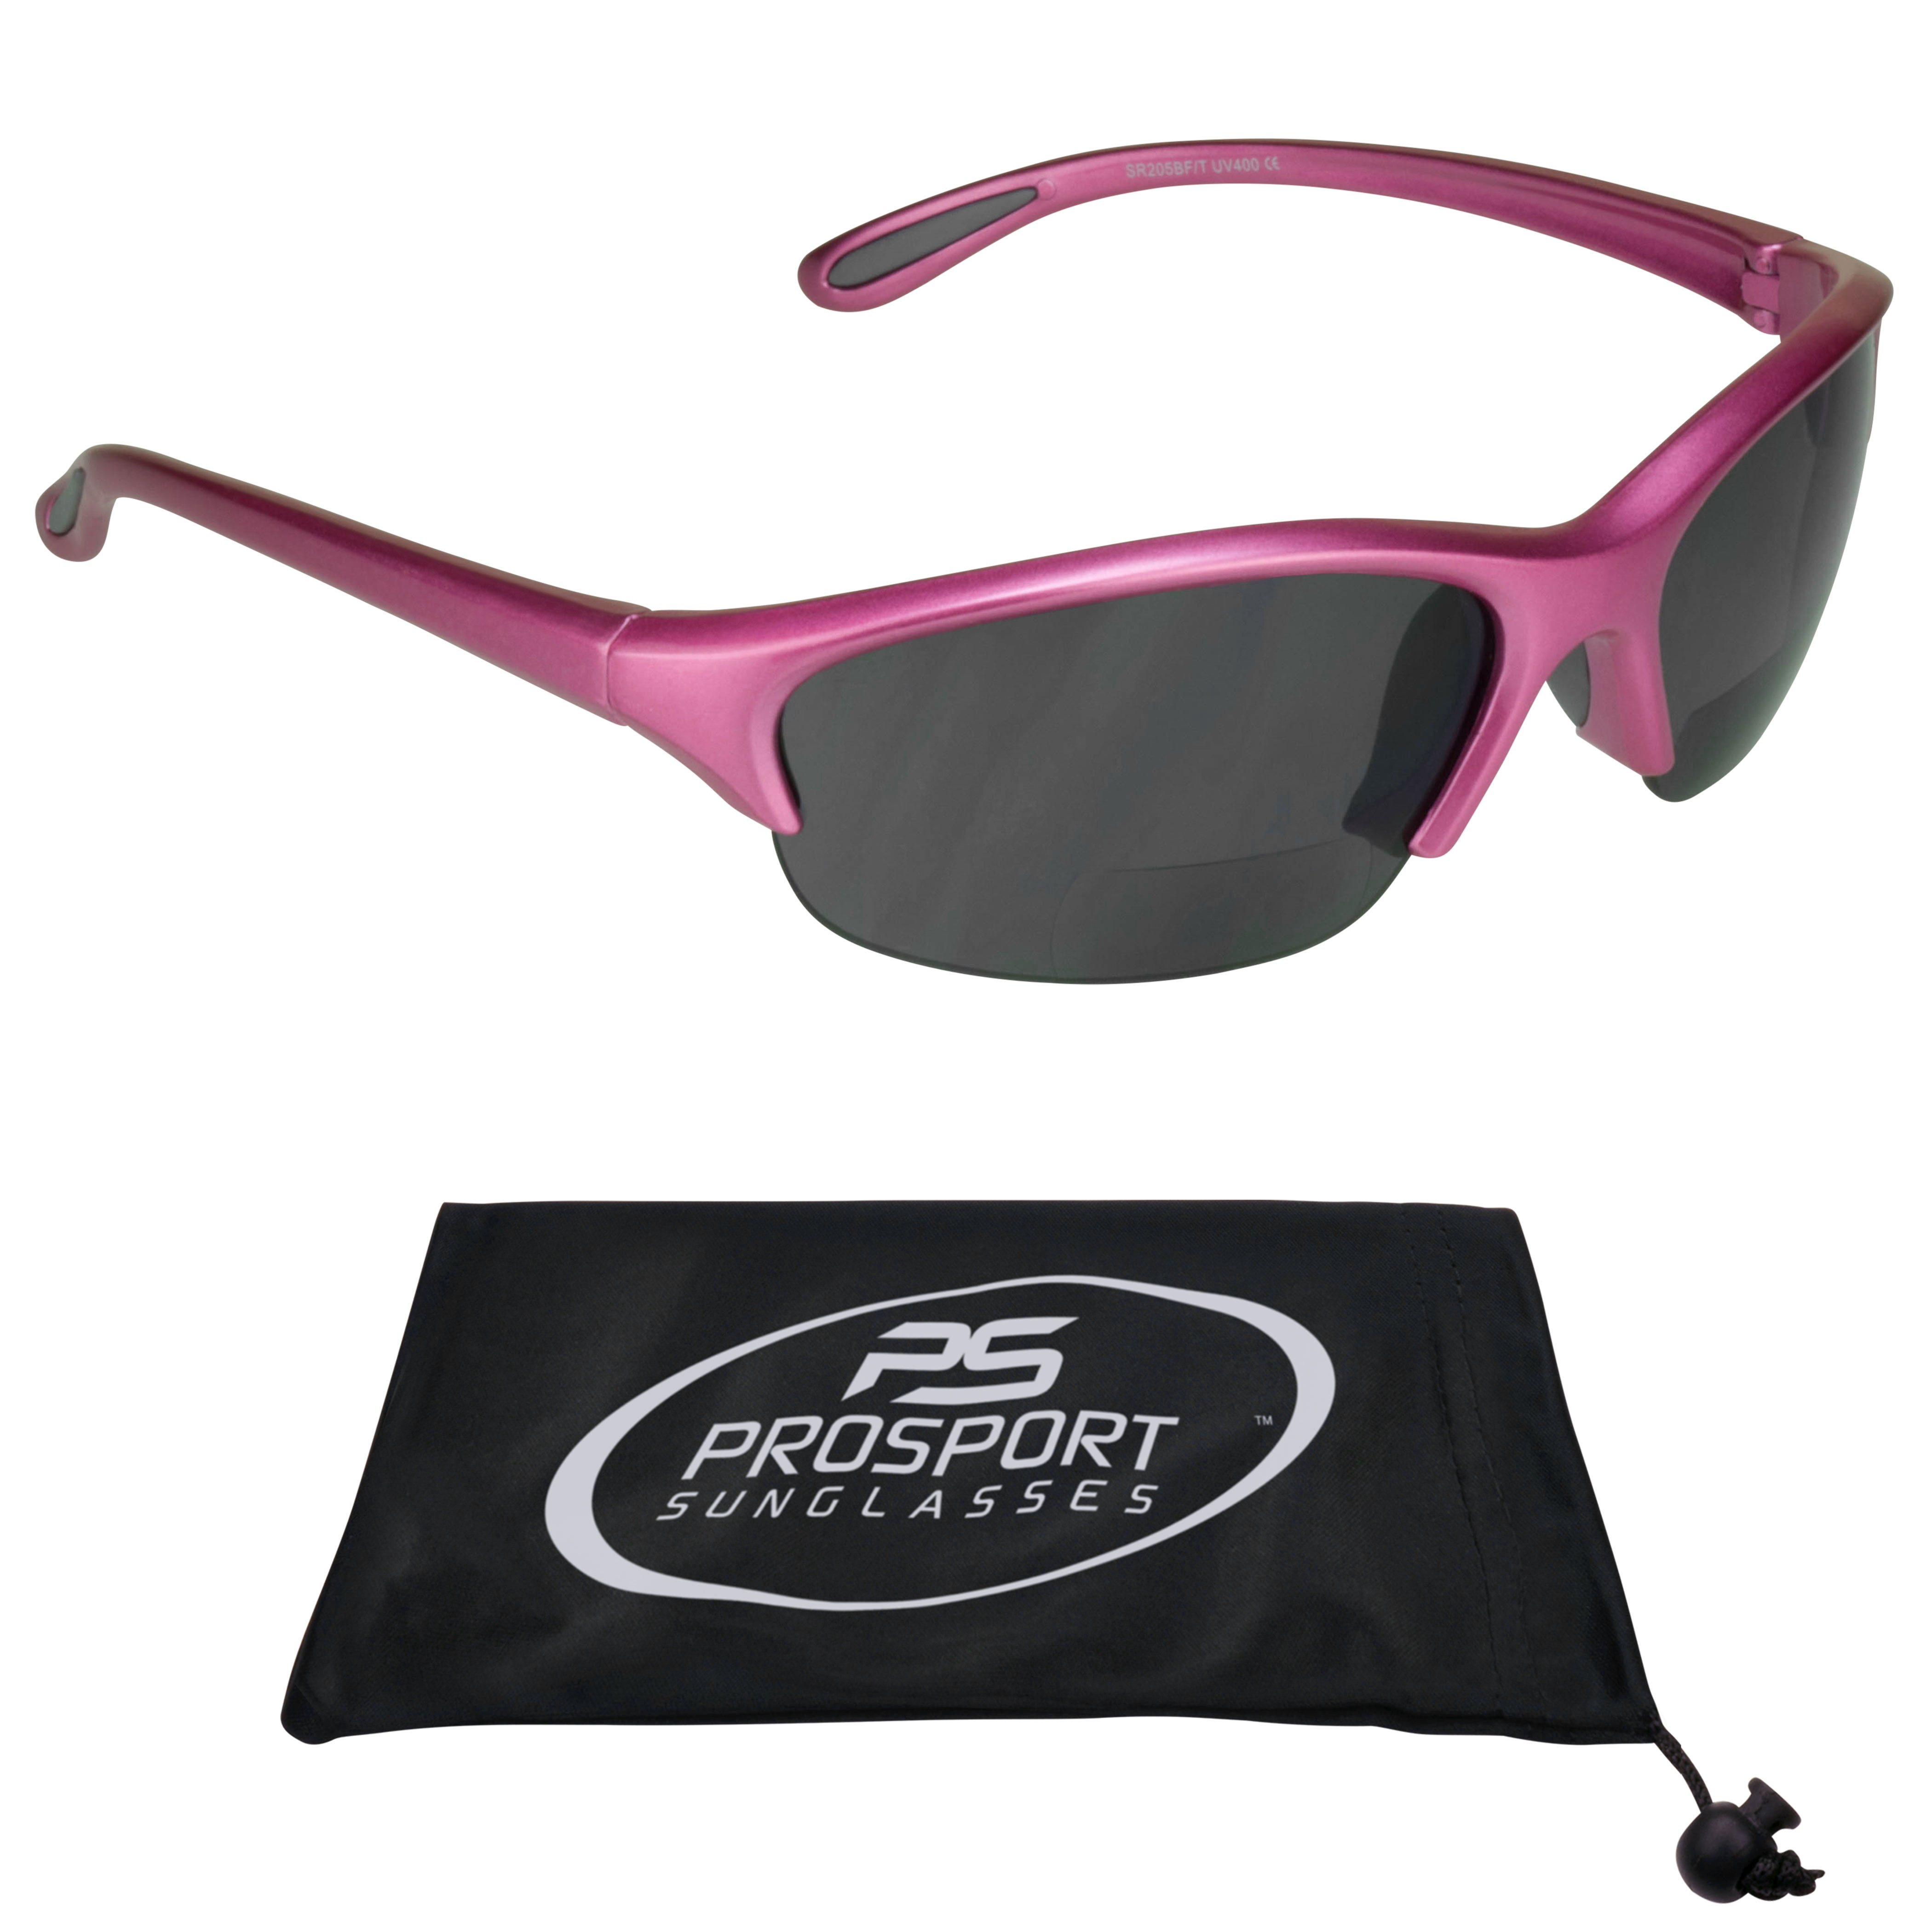 proSPORT BIFOCAL Safety Sunglass Reader Pink Semi Rimless Frame Women - image 1 of 6